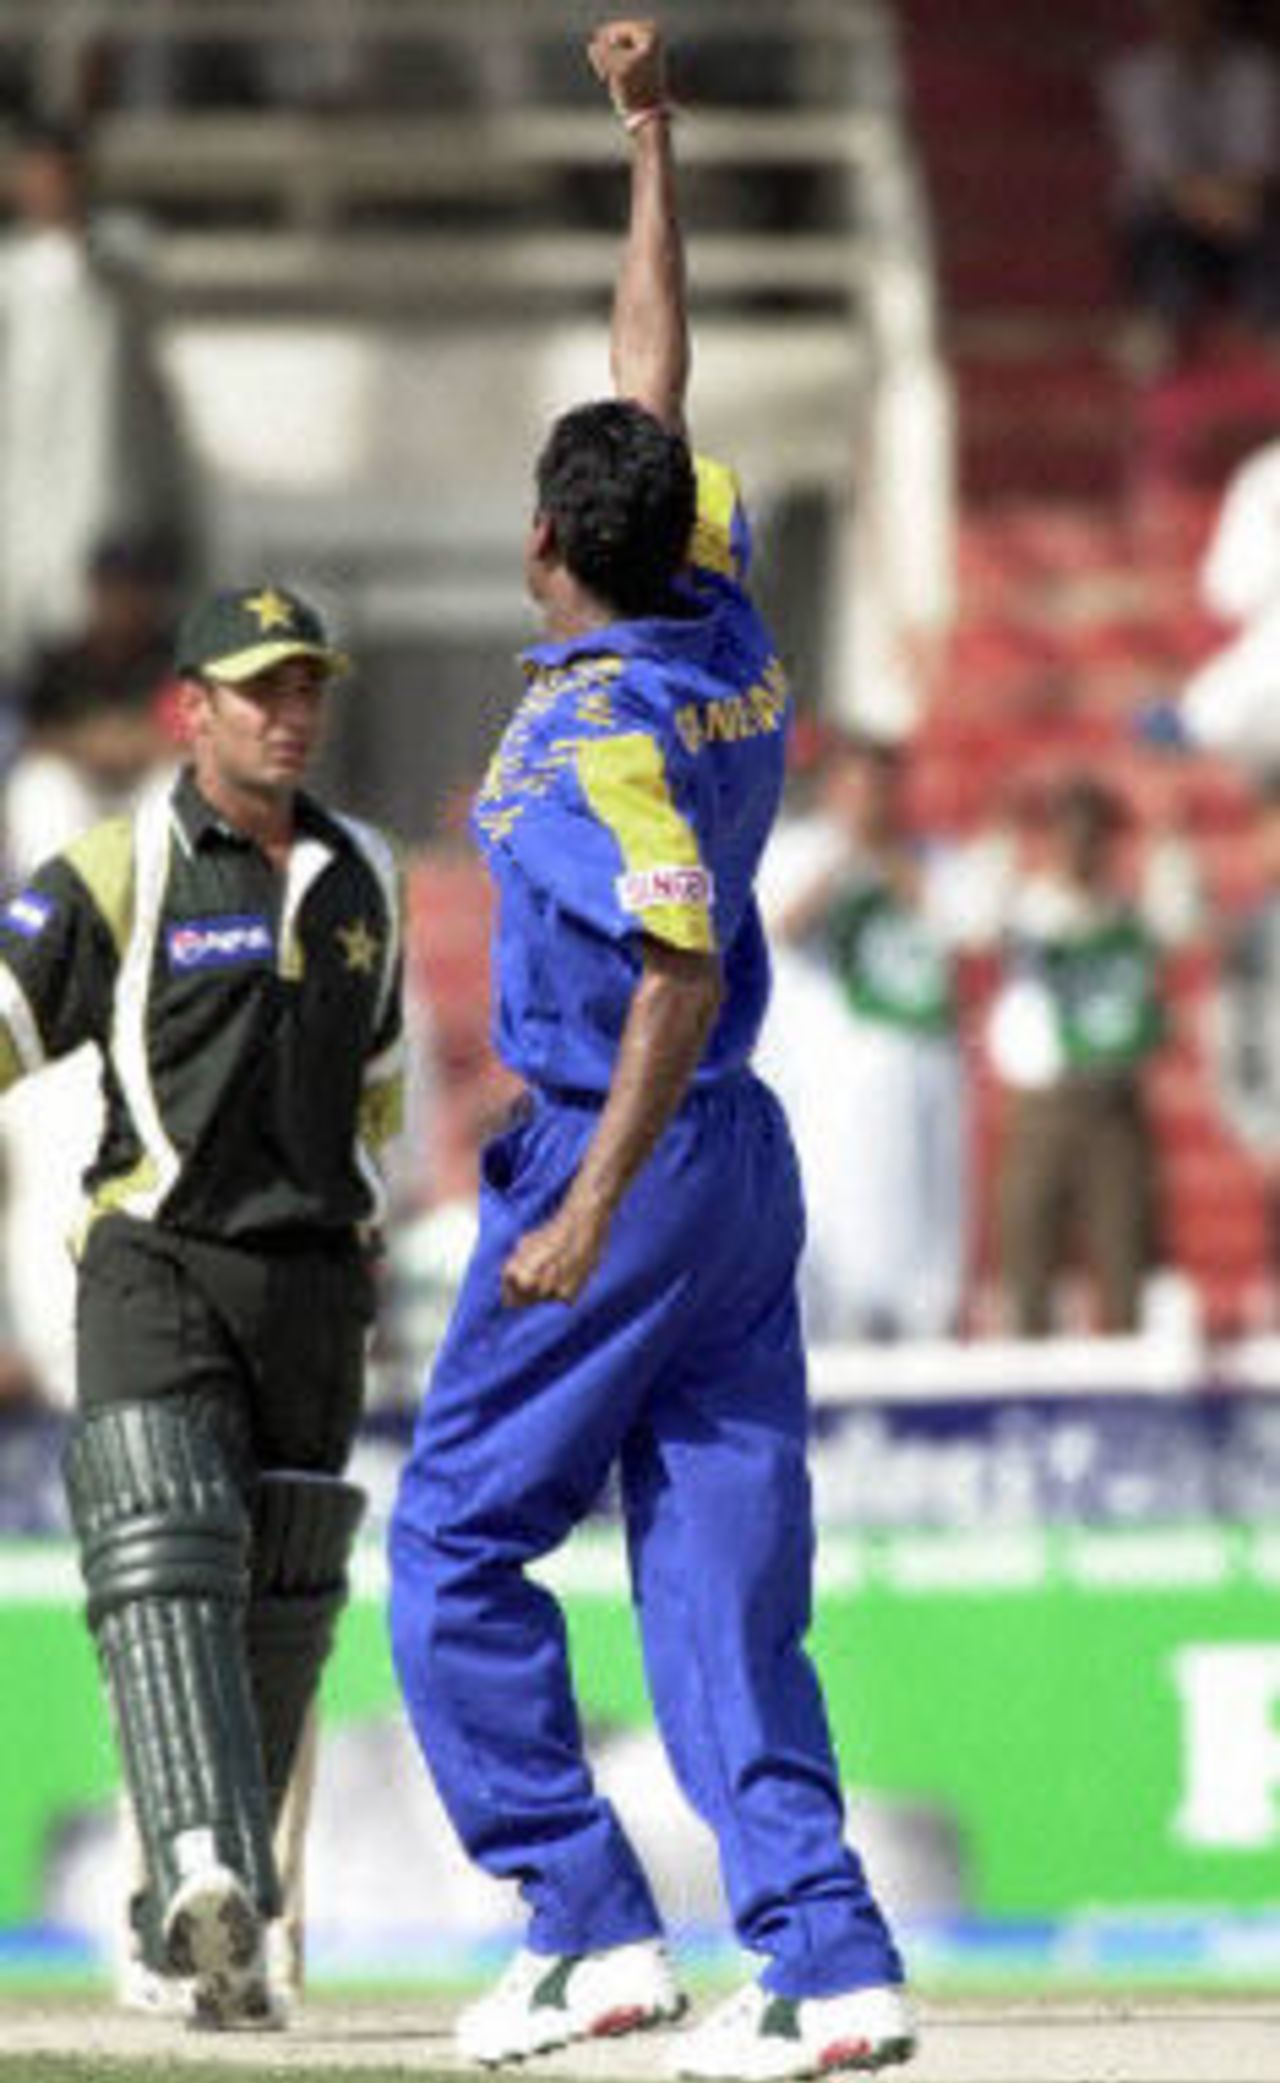 Ganegama clebrates after getting Imran Farhat leg before, ODI 1 at Sharjah, Pakistan v Sri Lanka, 9 April 2001